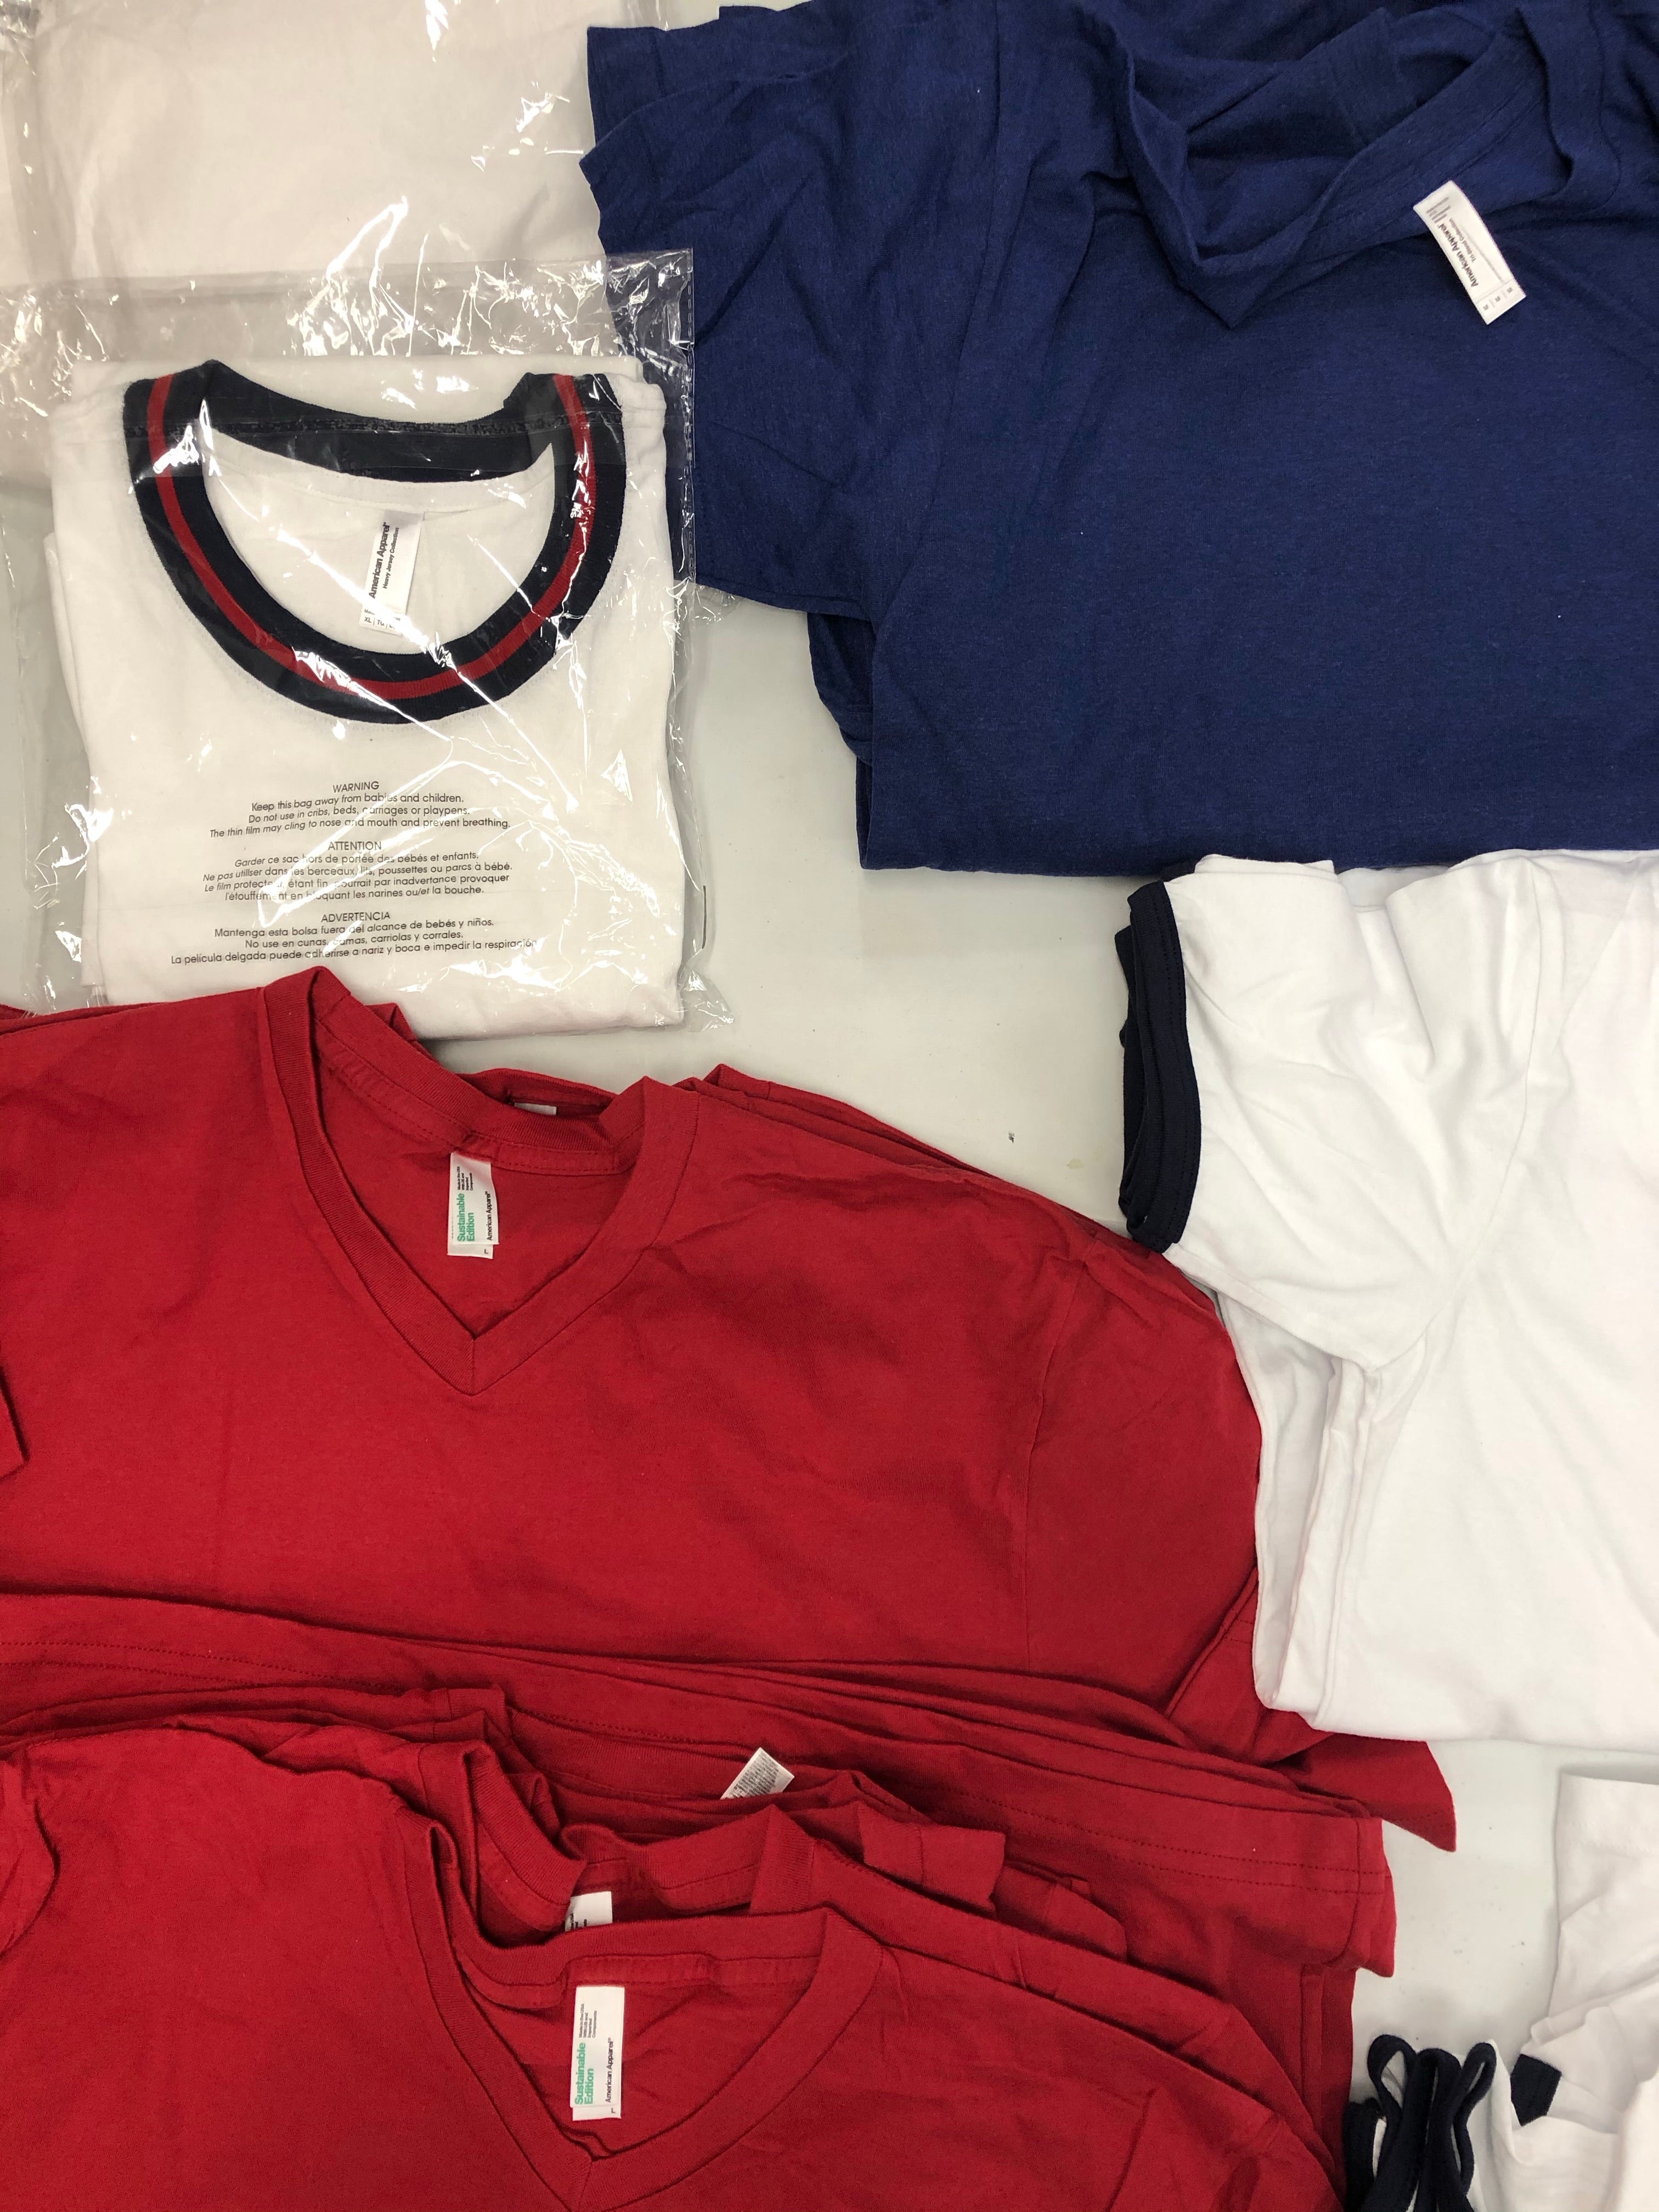 Objector Regnbue Anklage Men's Clothing T-Shirt Wholesale Lot, AMERICAN APPAREL , 41 items, She -  BulkOrderUSA.com